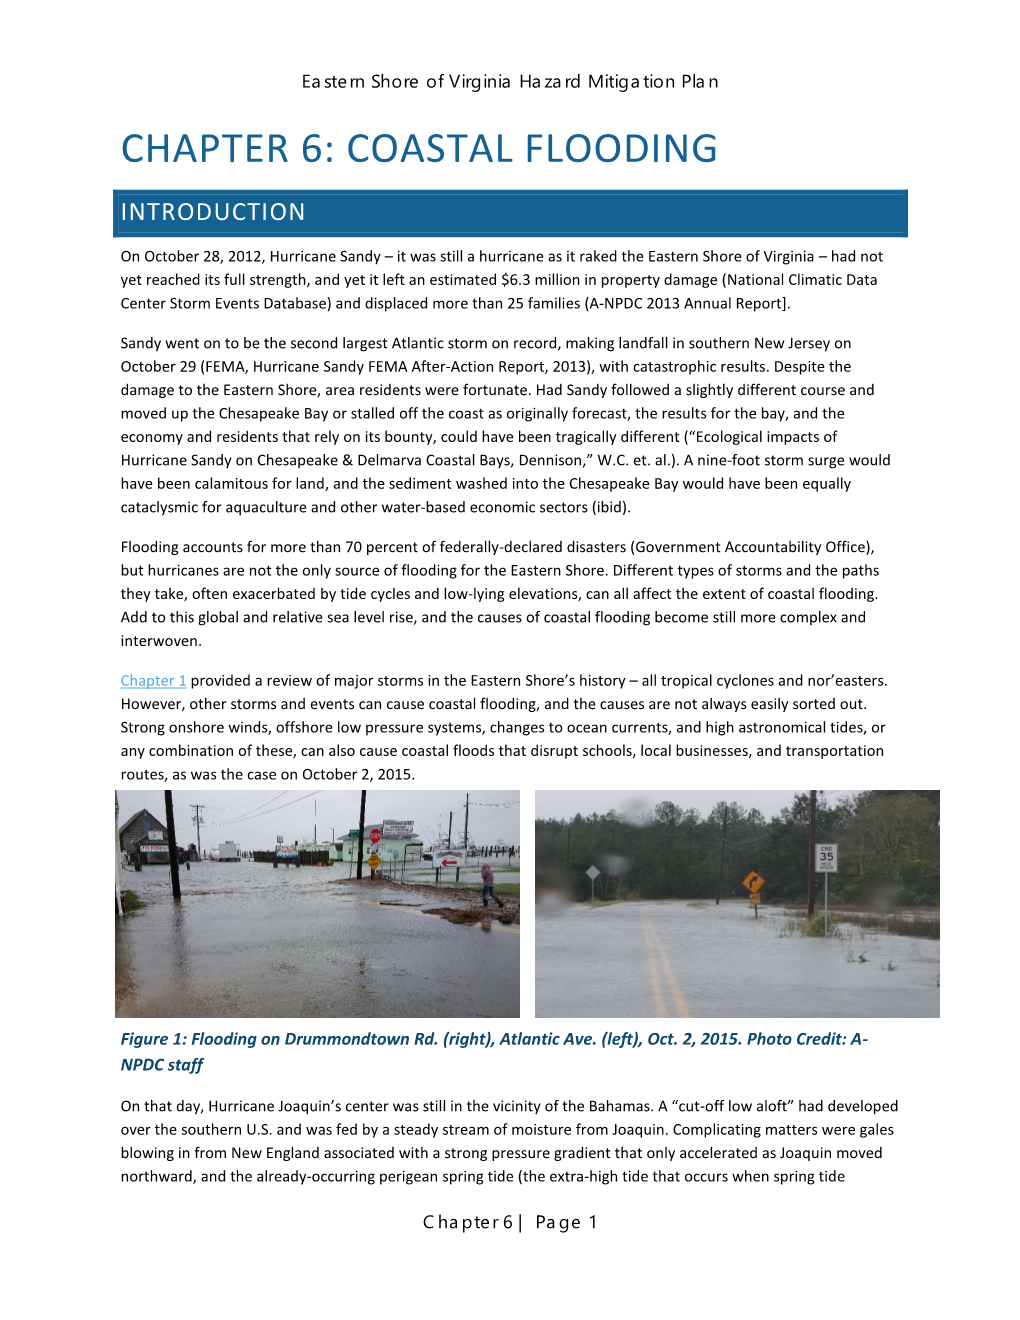 Chapter 6: Coastal Flooding Introduction